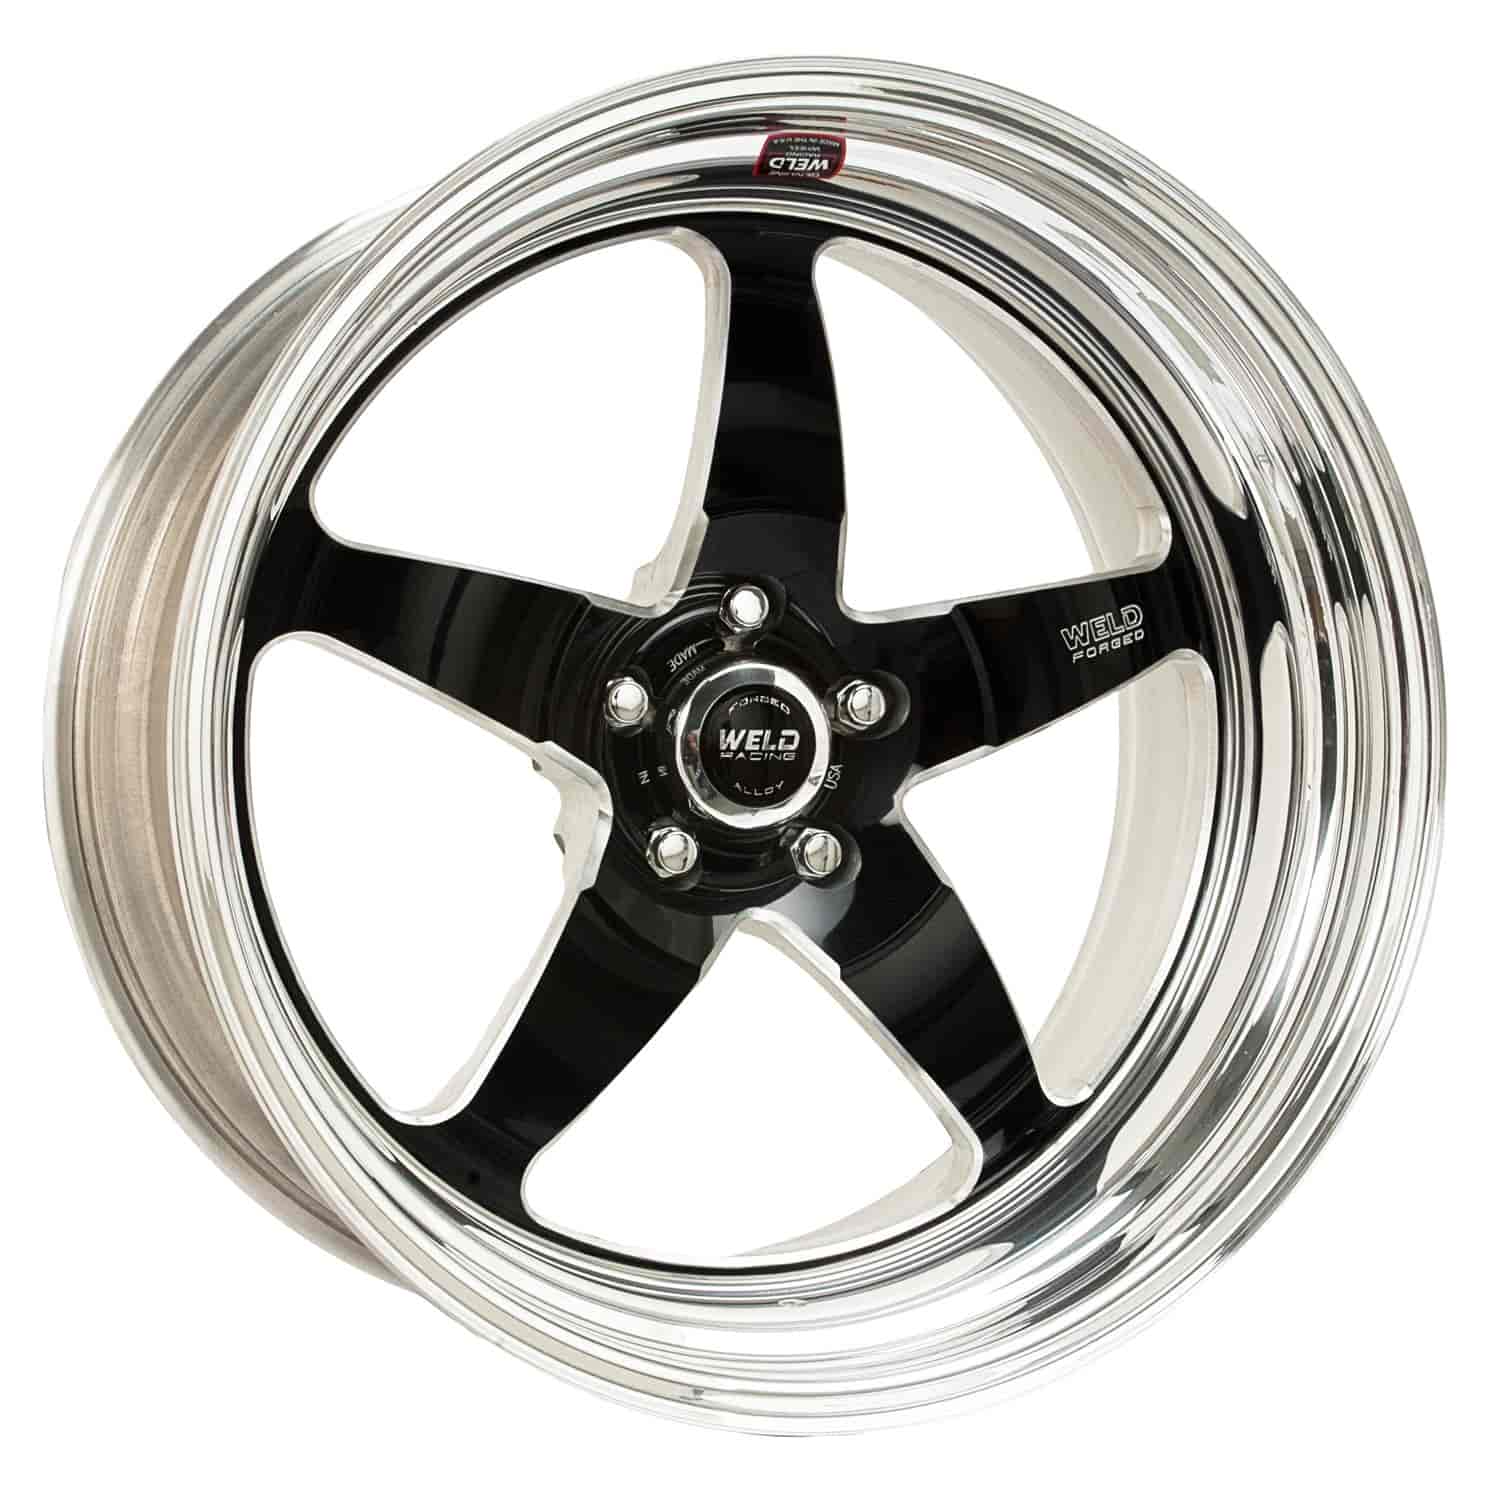 RT-S Series Wheel Size: 17" x 5" Bolt Circle: 5 x 120mm Rear Spacing: 2.20" Black Offset: -37.59mm